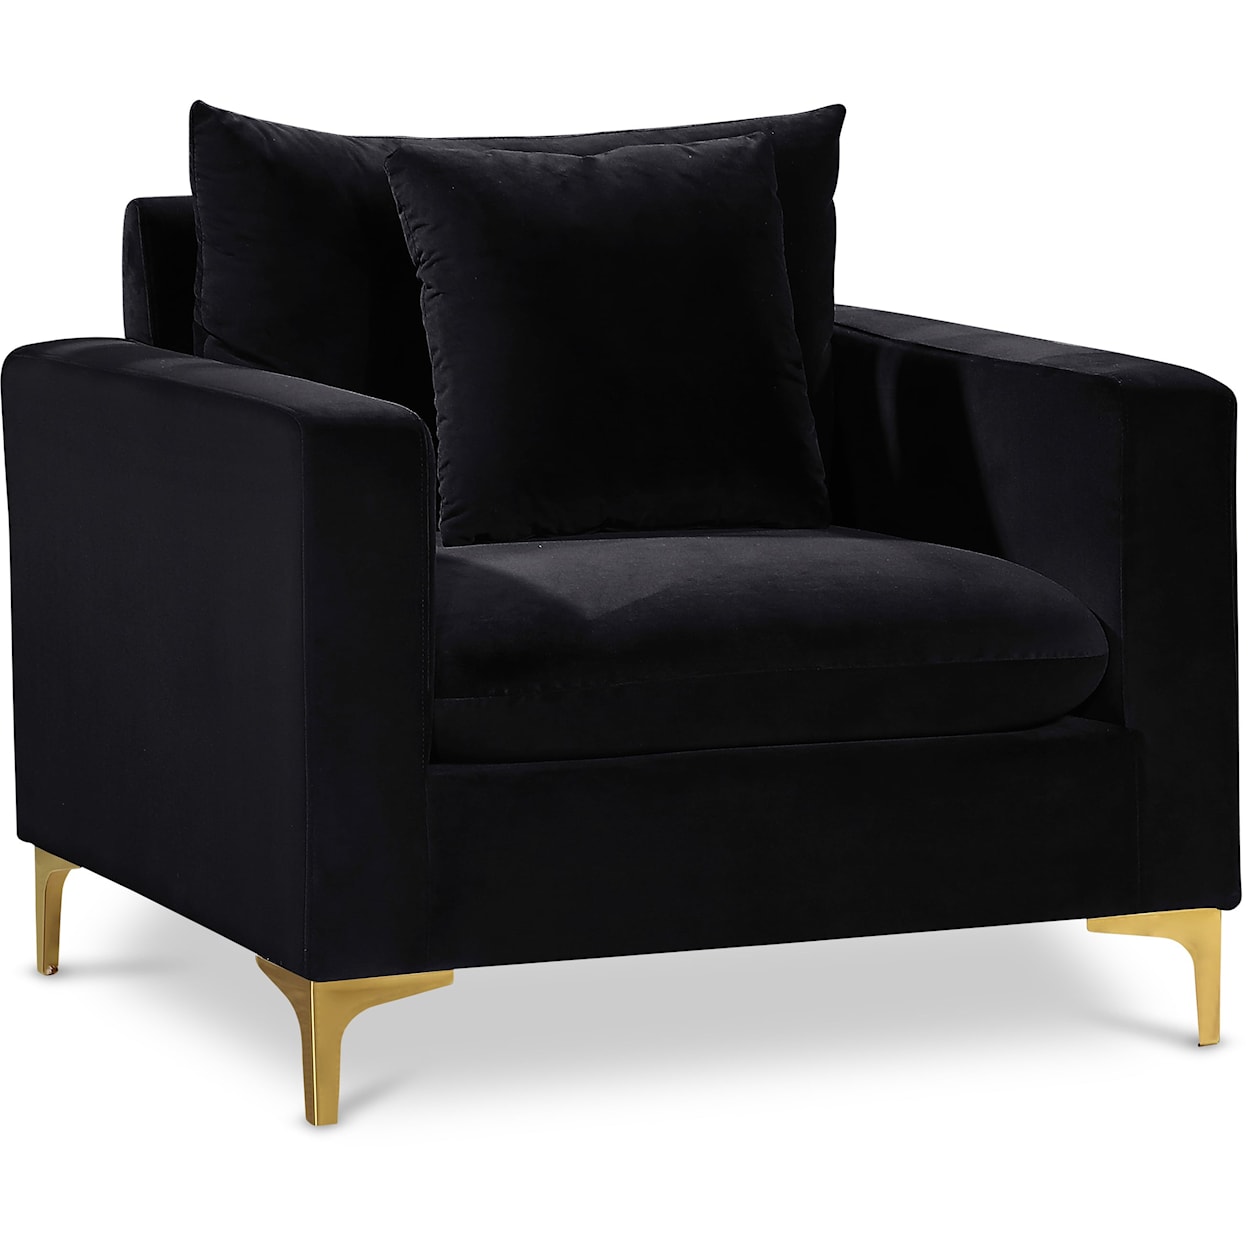 Meridian Furniture Naomi Chair